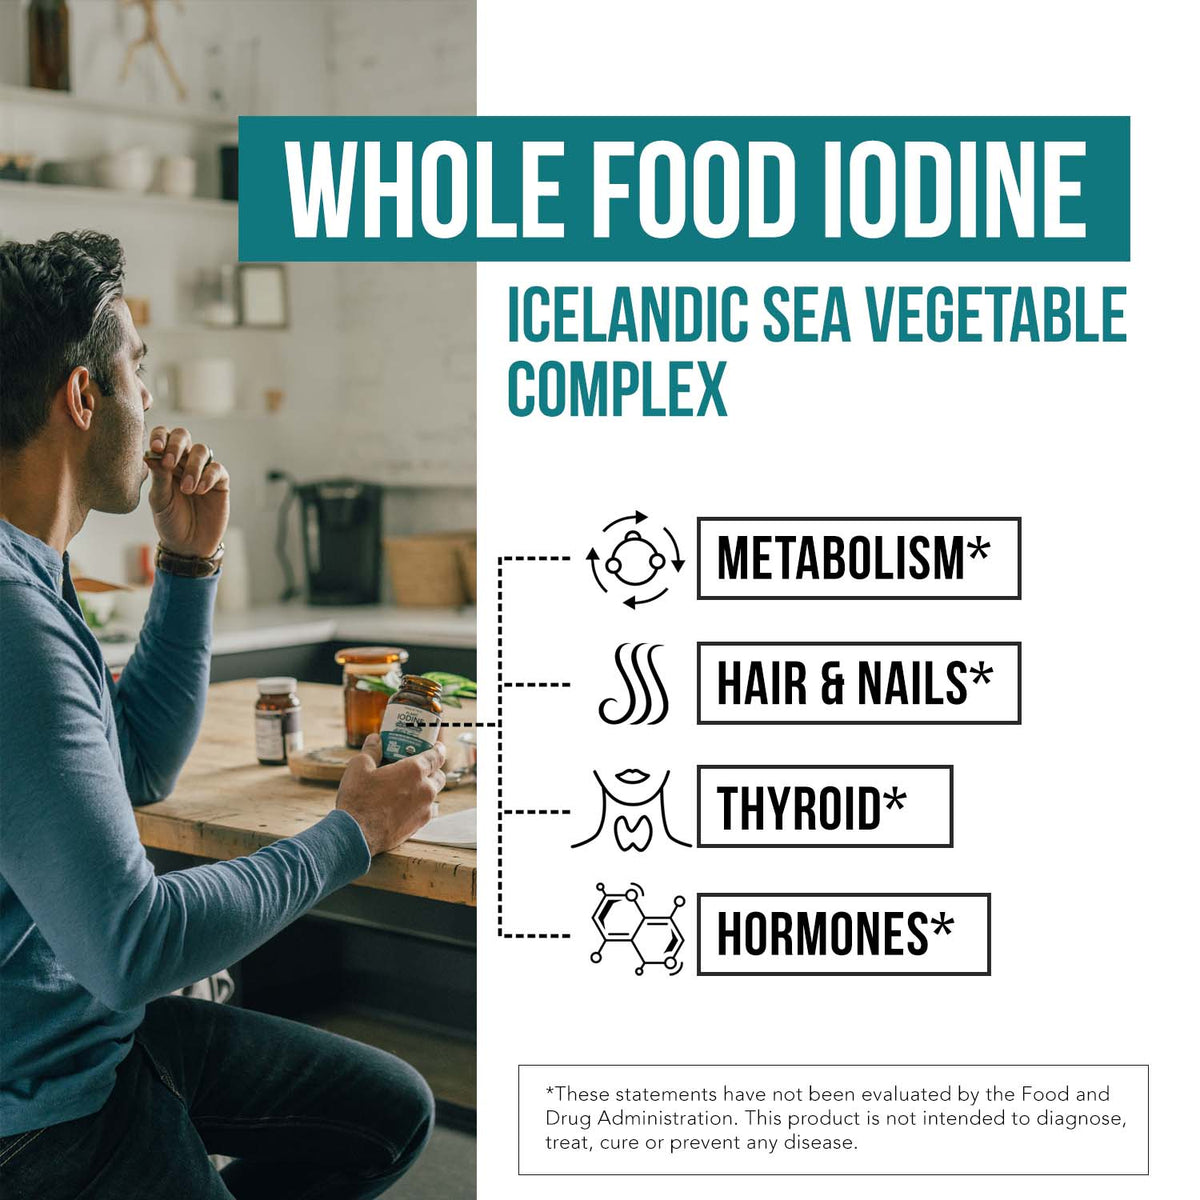 Plant Iodine (1500 mcg) Whole-Food Iodine Supplement